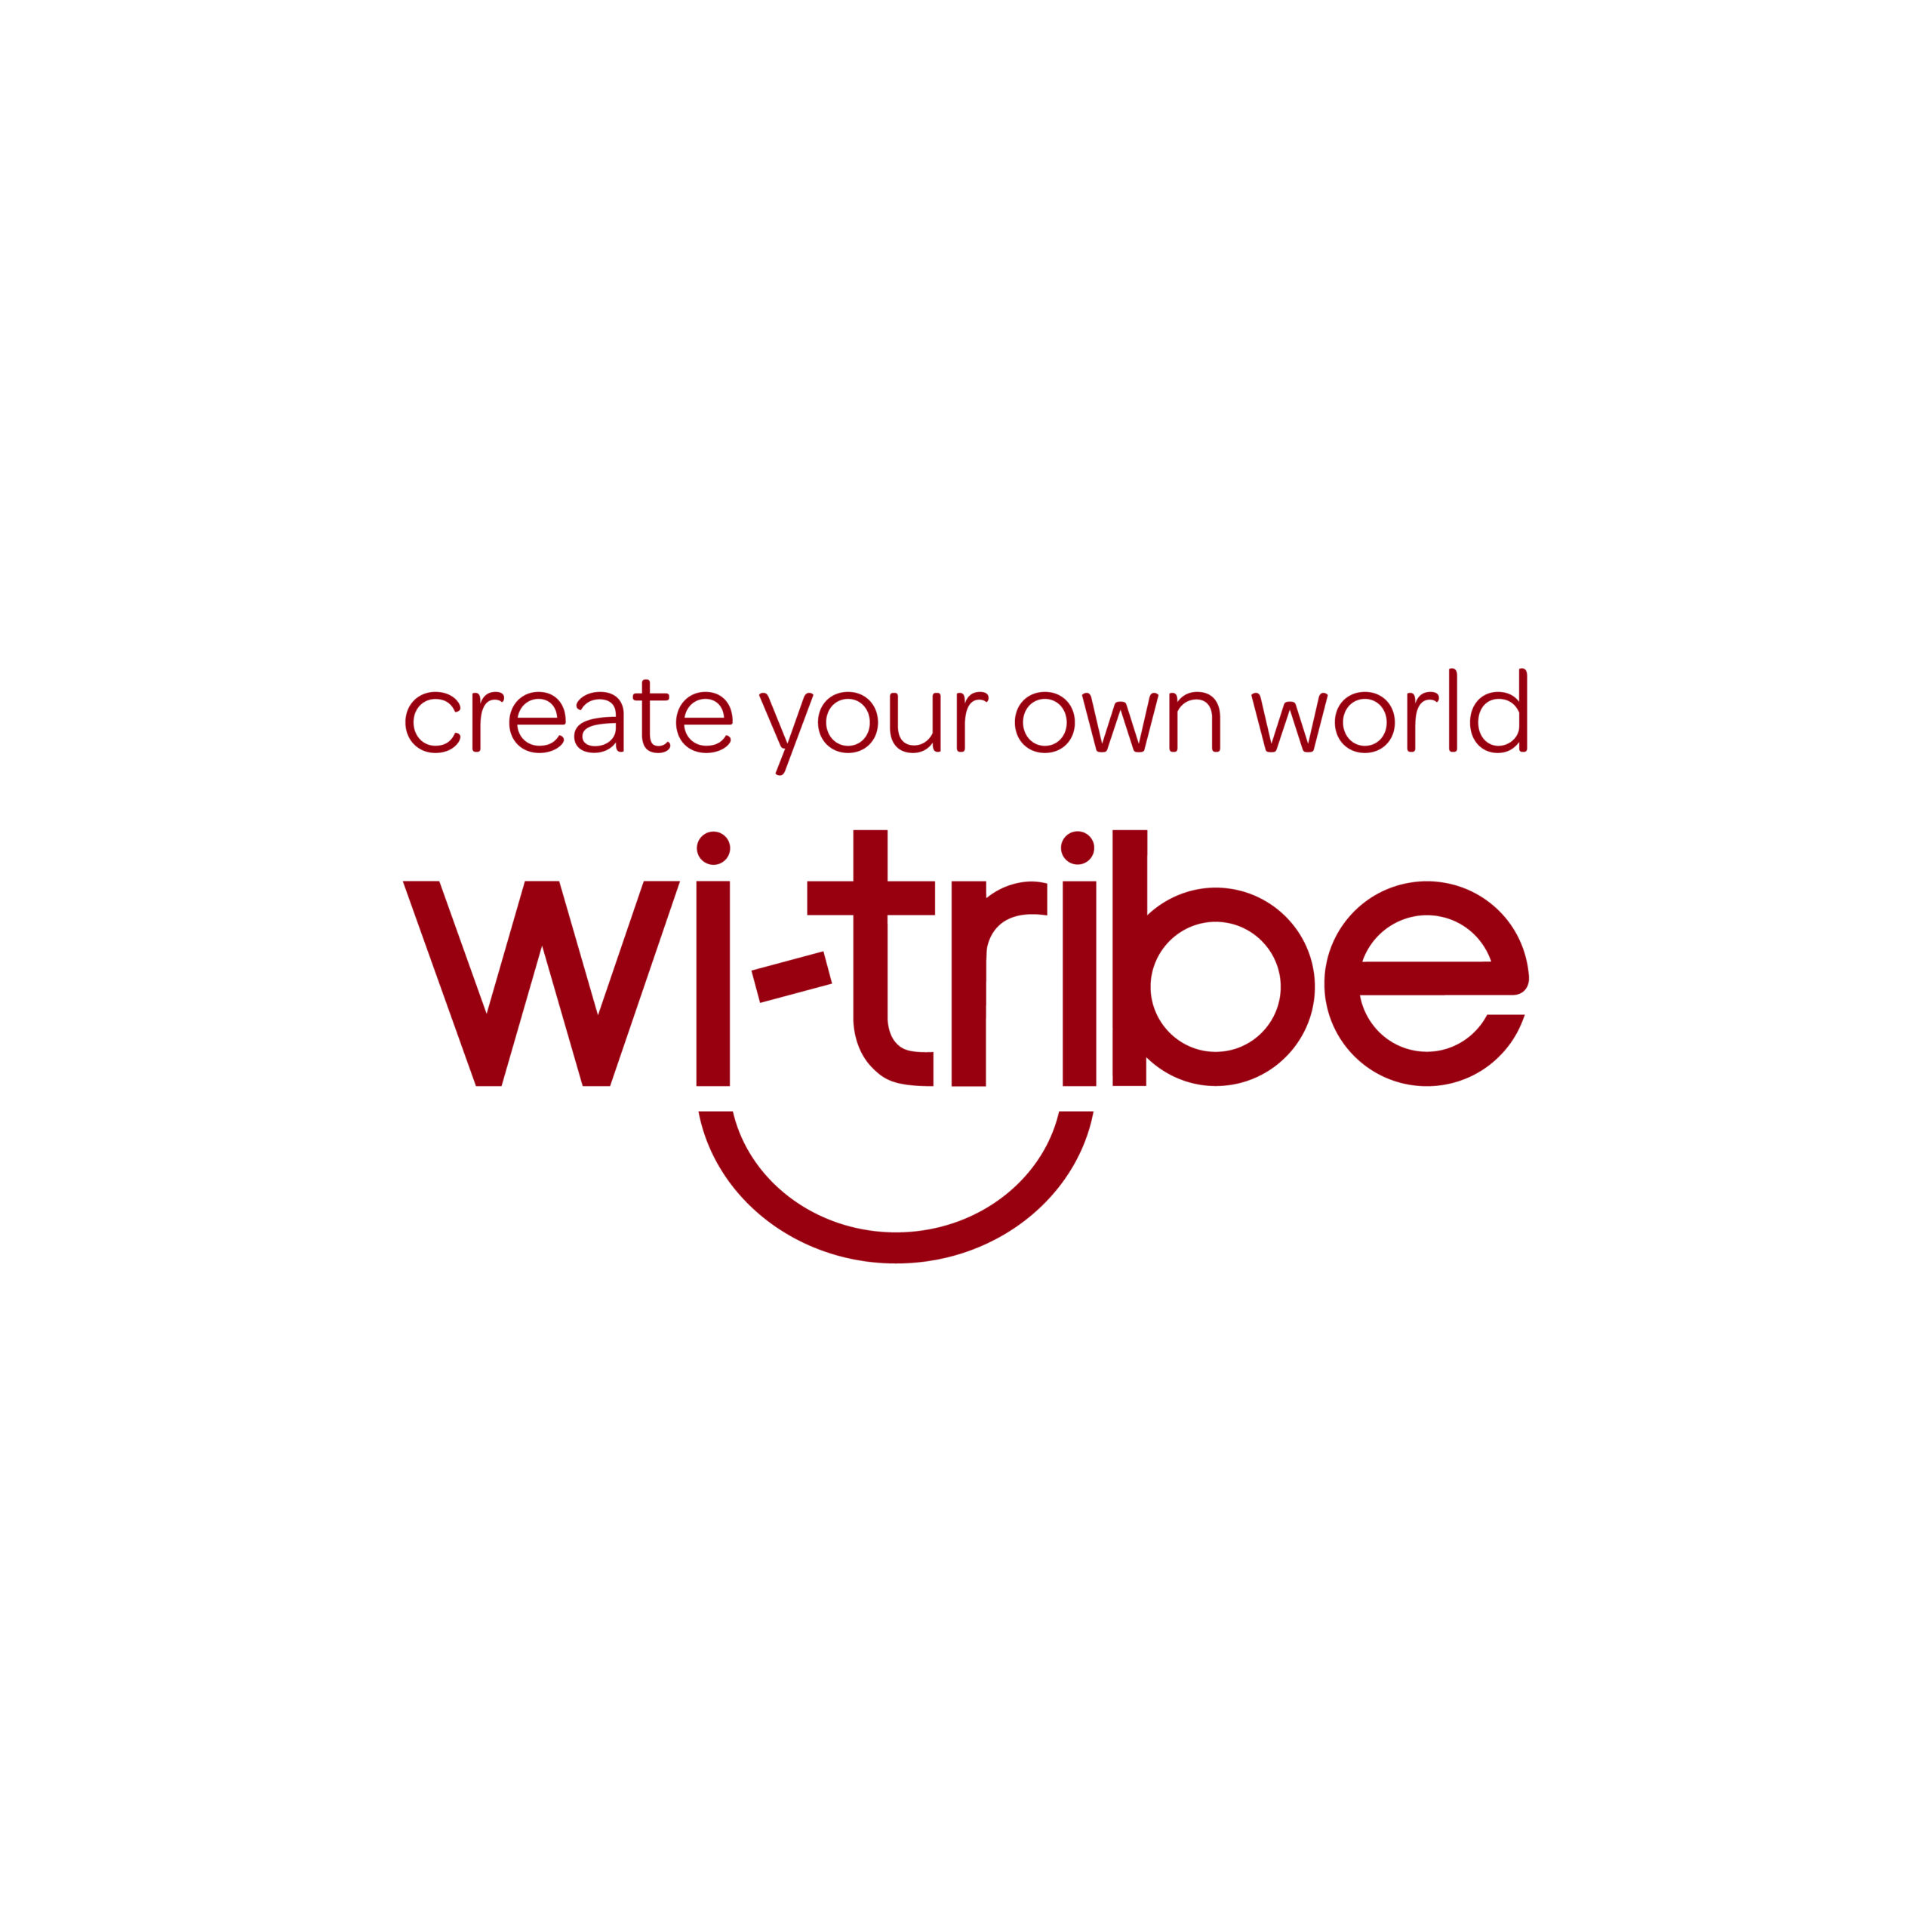 WI TRIBE logo vector